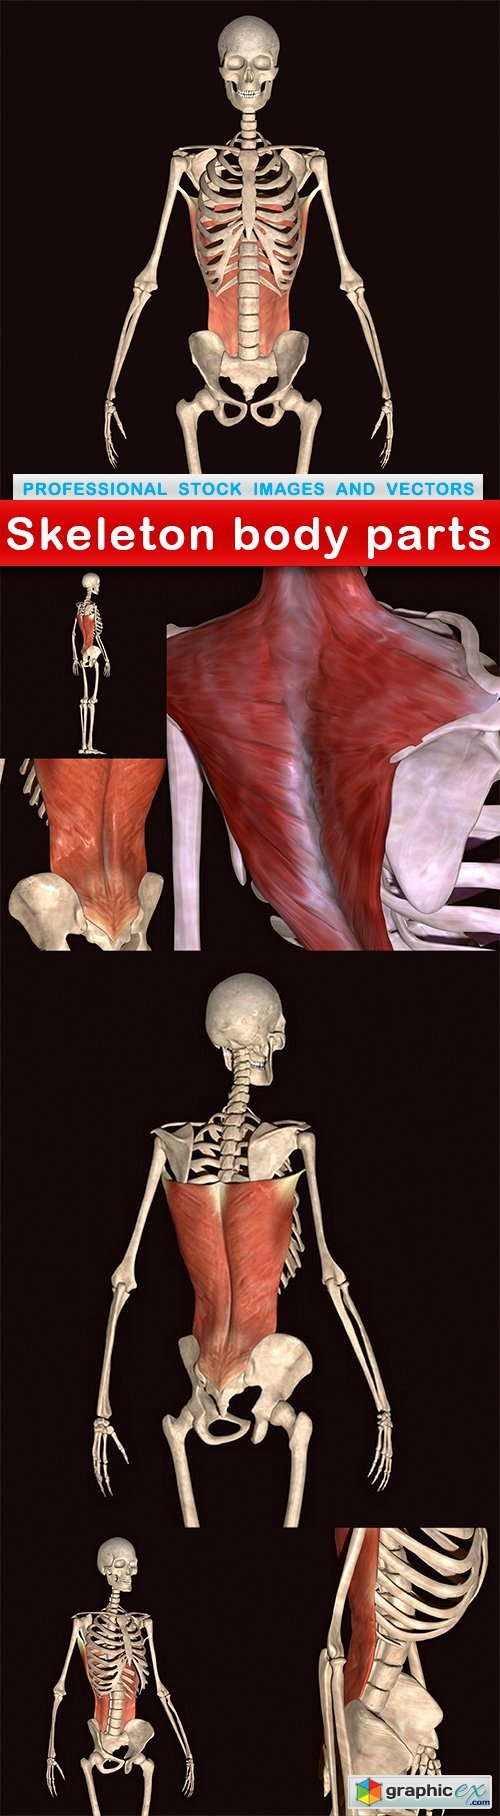 Skeleton body parts - 7 UHQ JPEG